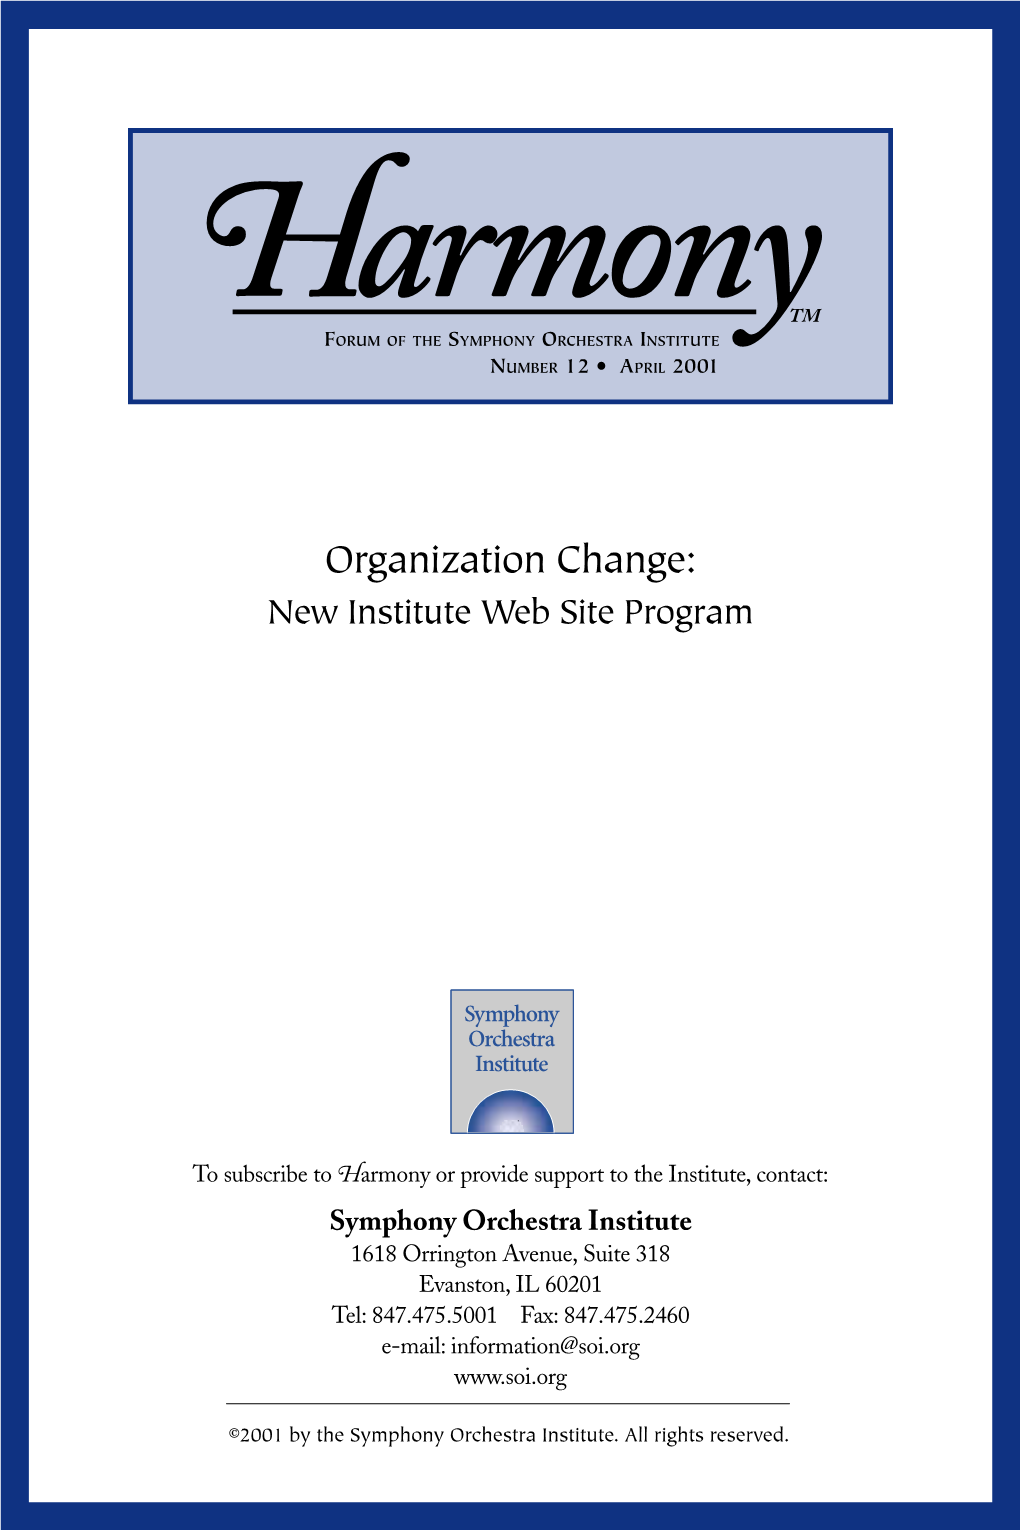 Organization Change: New Institute Web Site Program